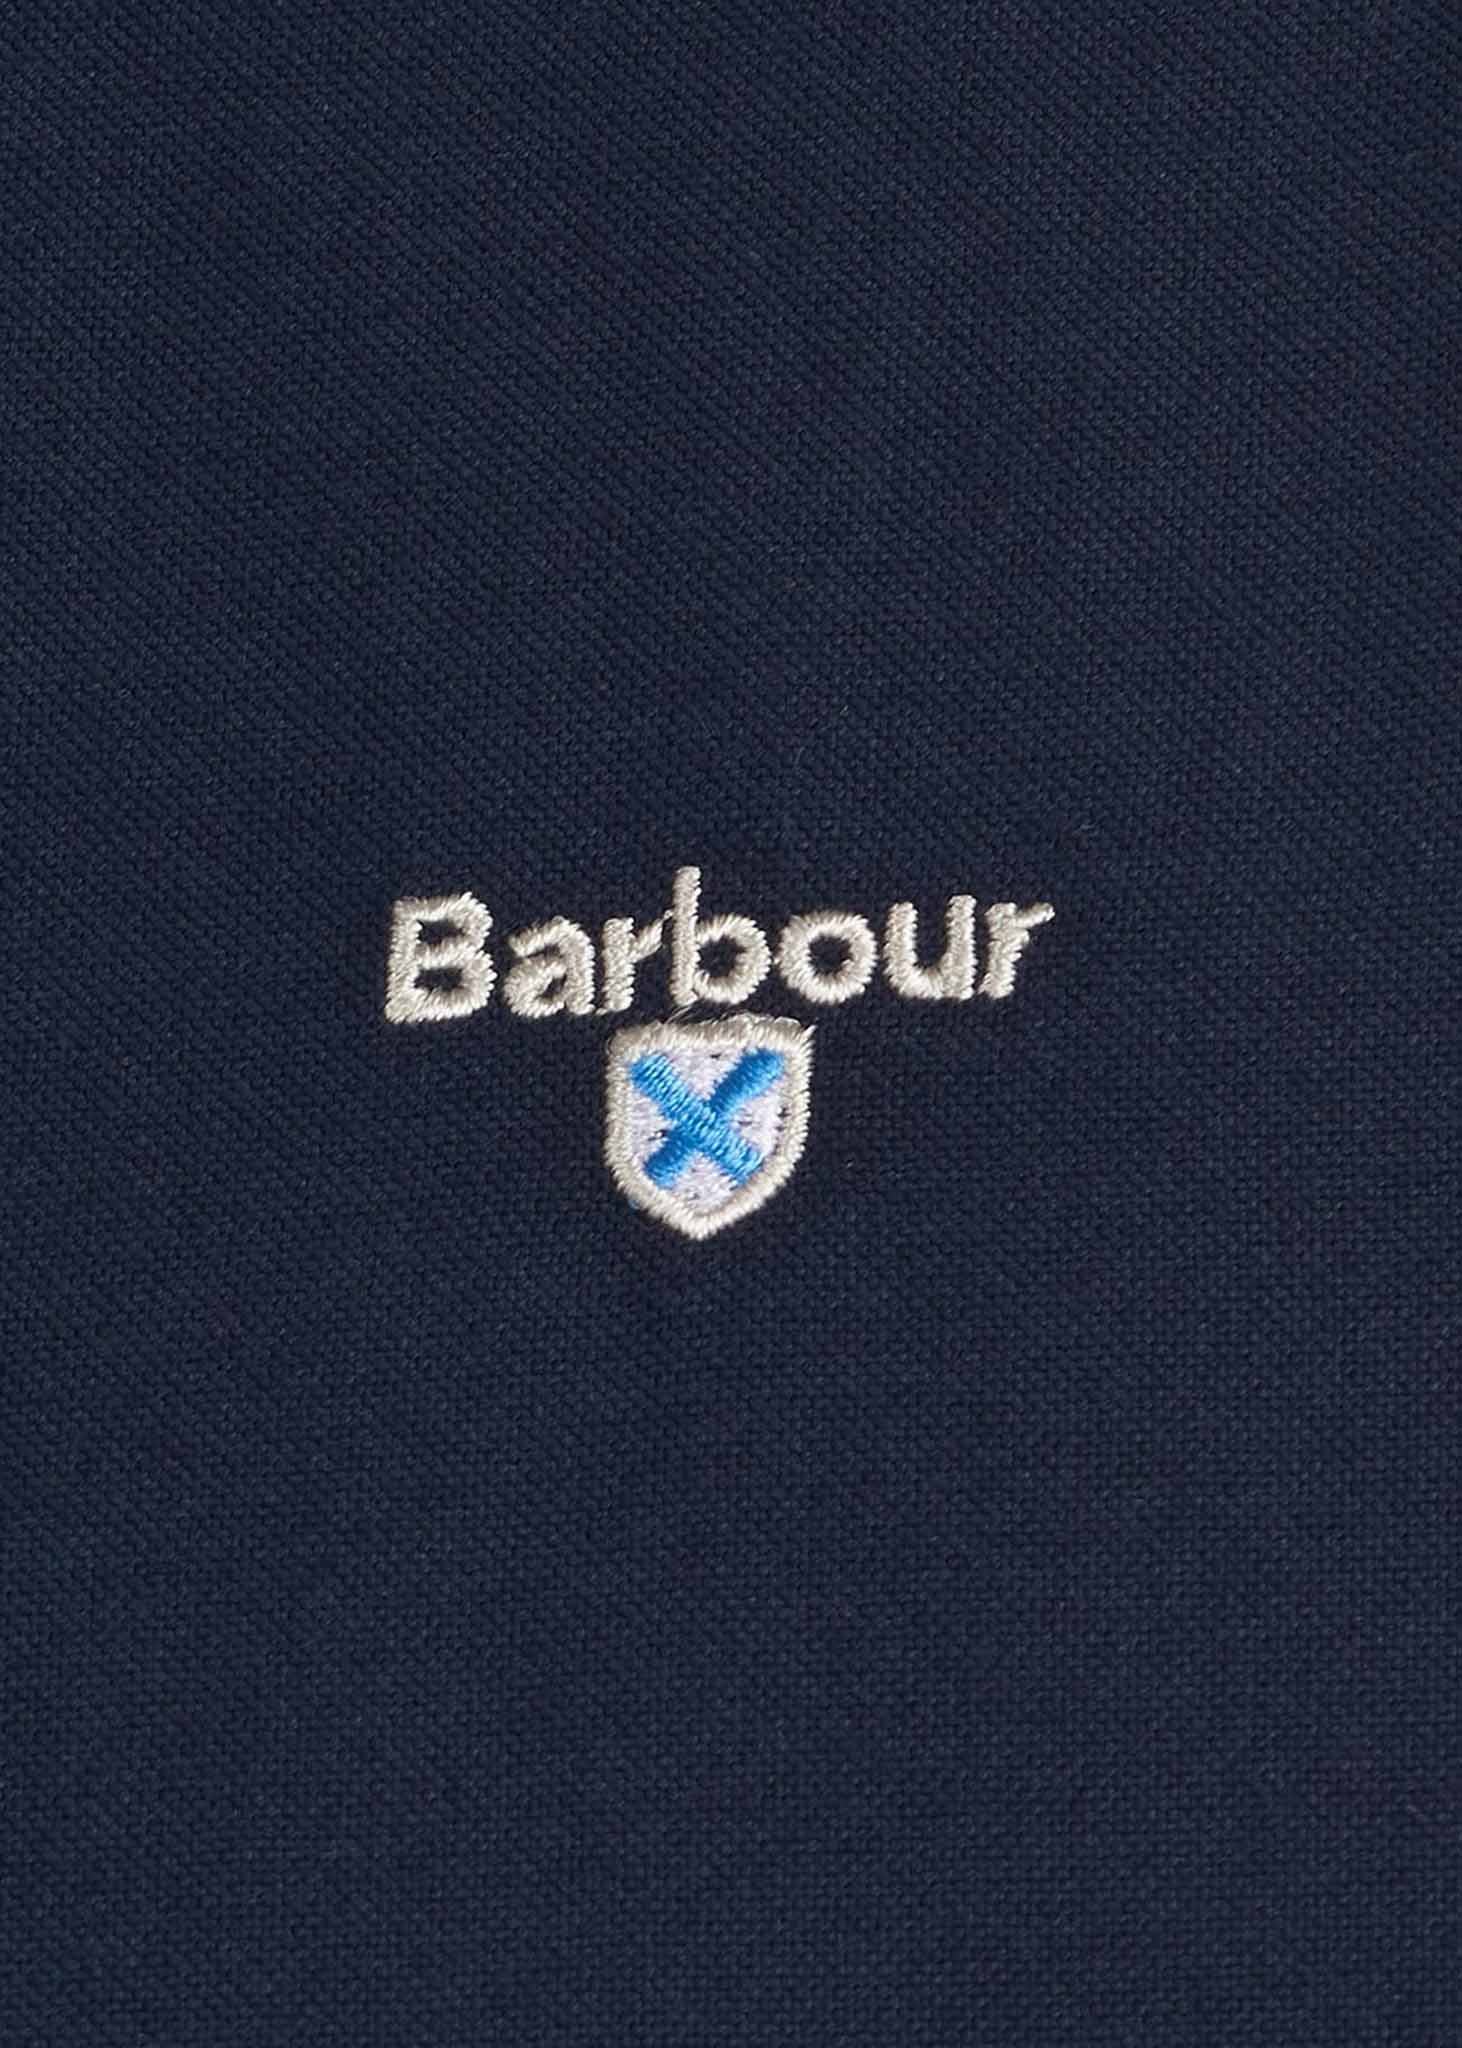 Barbour Overhemden  Oxford 3 tailored shirt - navy 